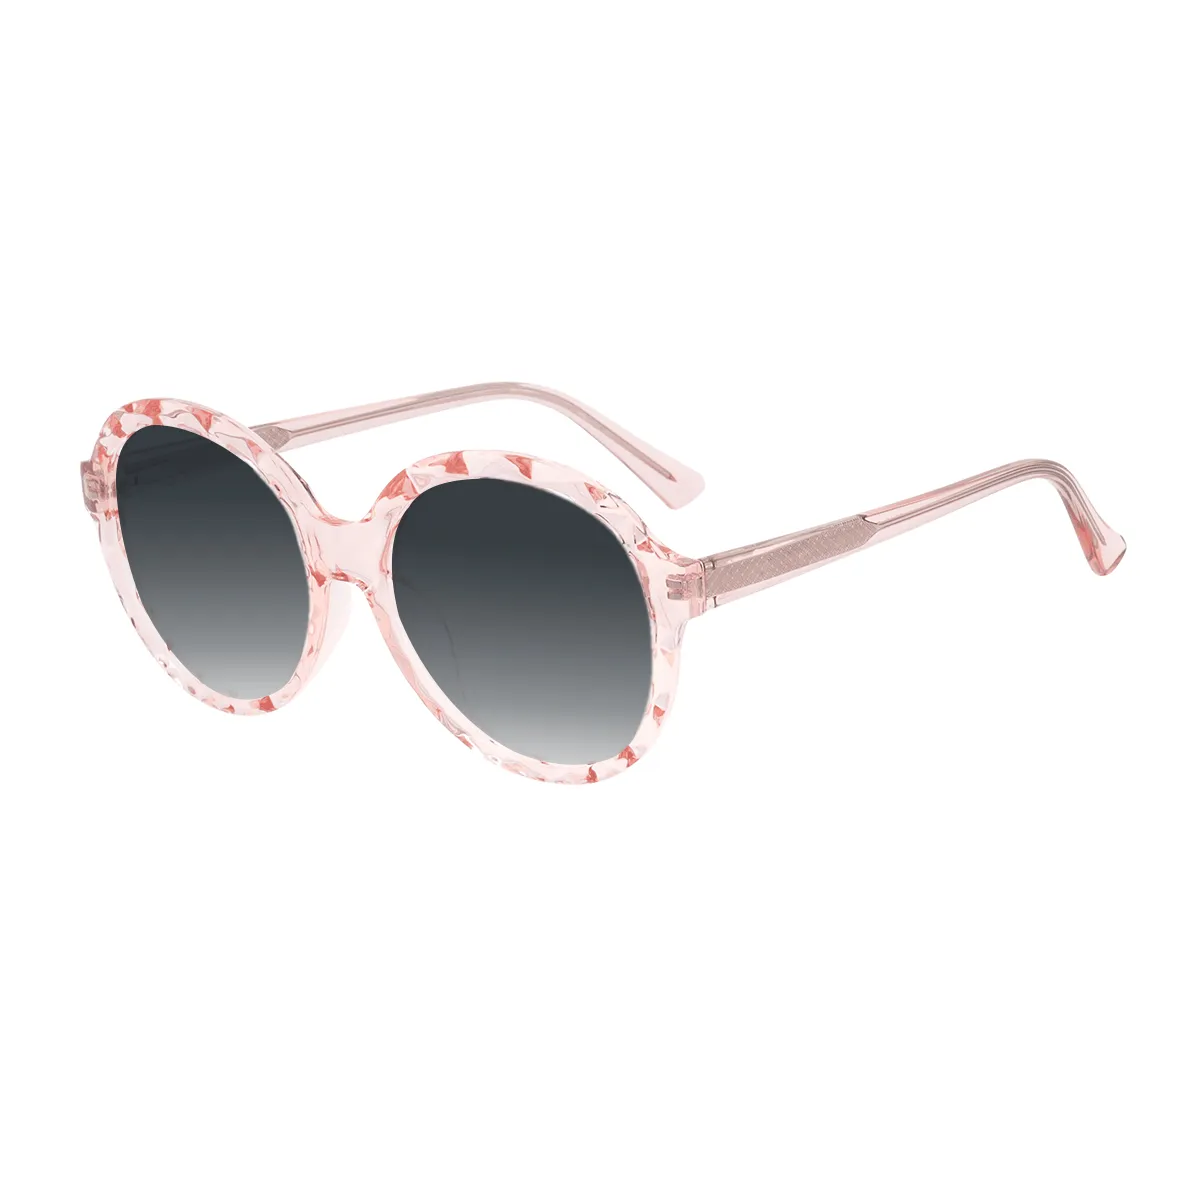 Minna - Round Transparent Pink Sunglasses for Women